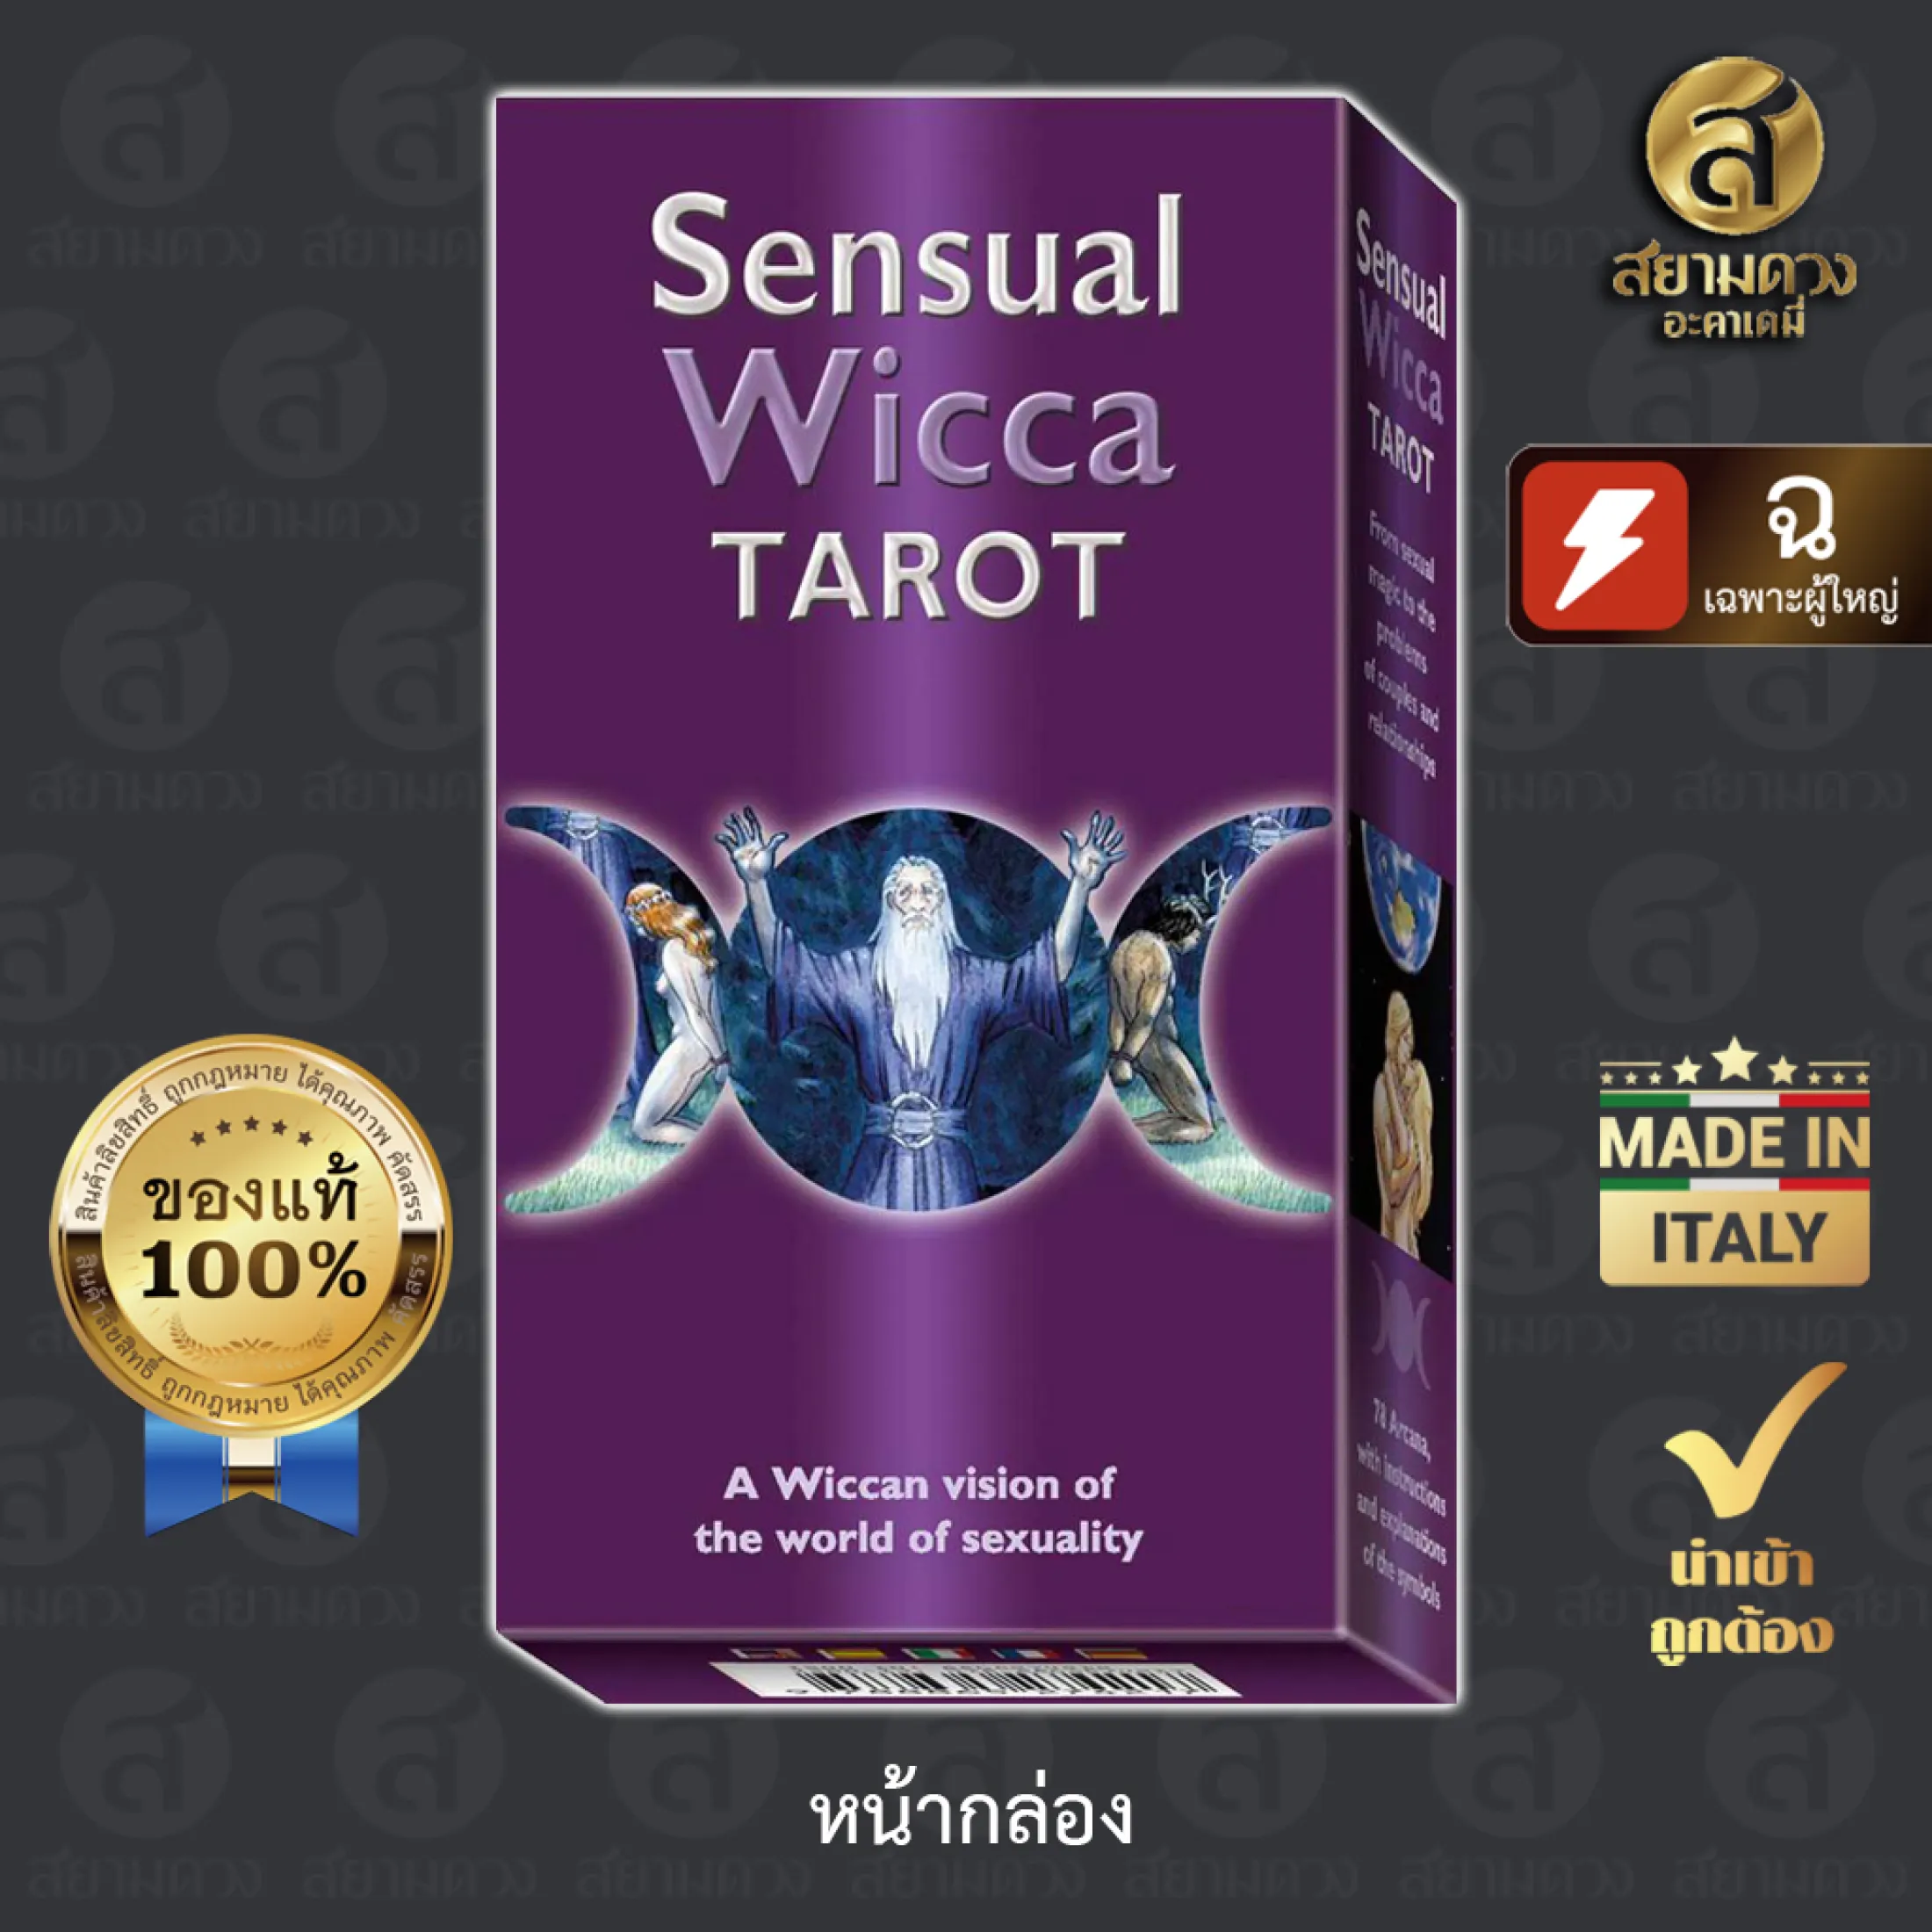 Sensual Wicca Tarot Telegraph